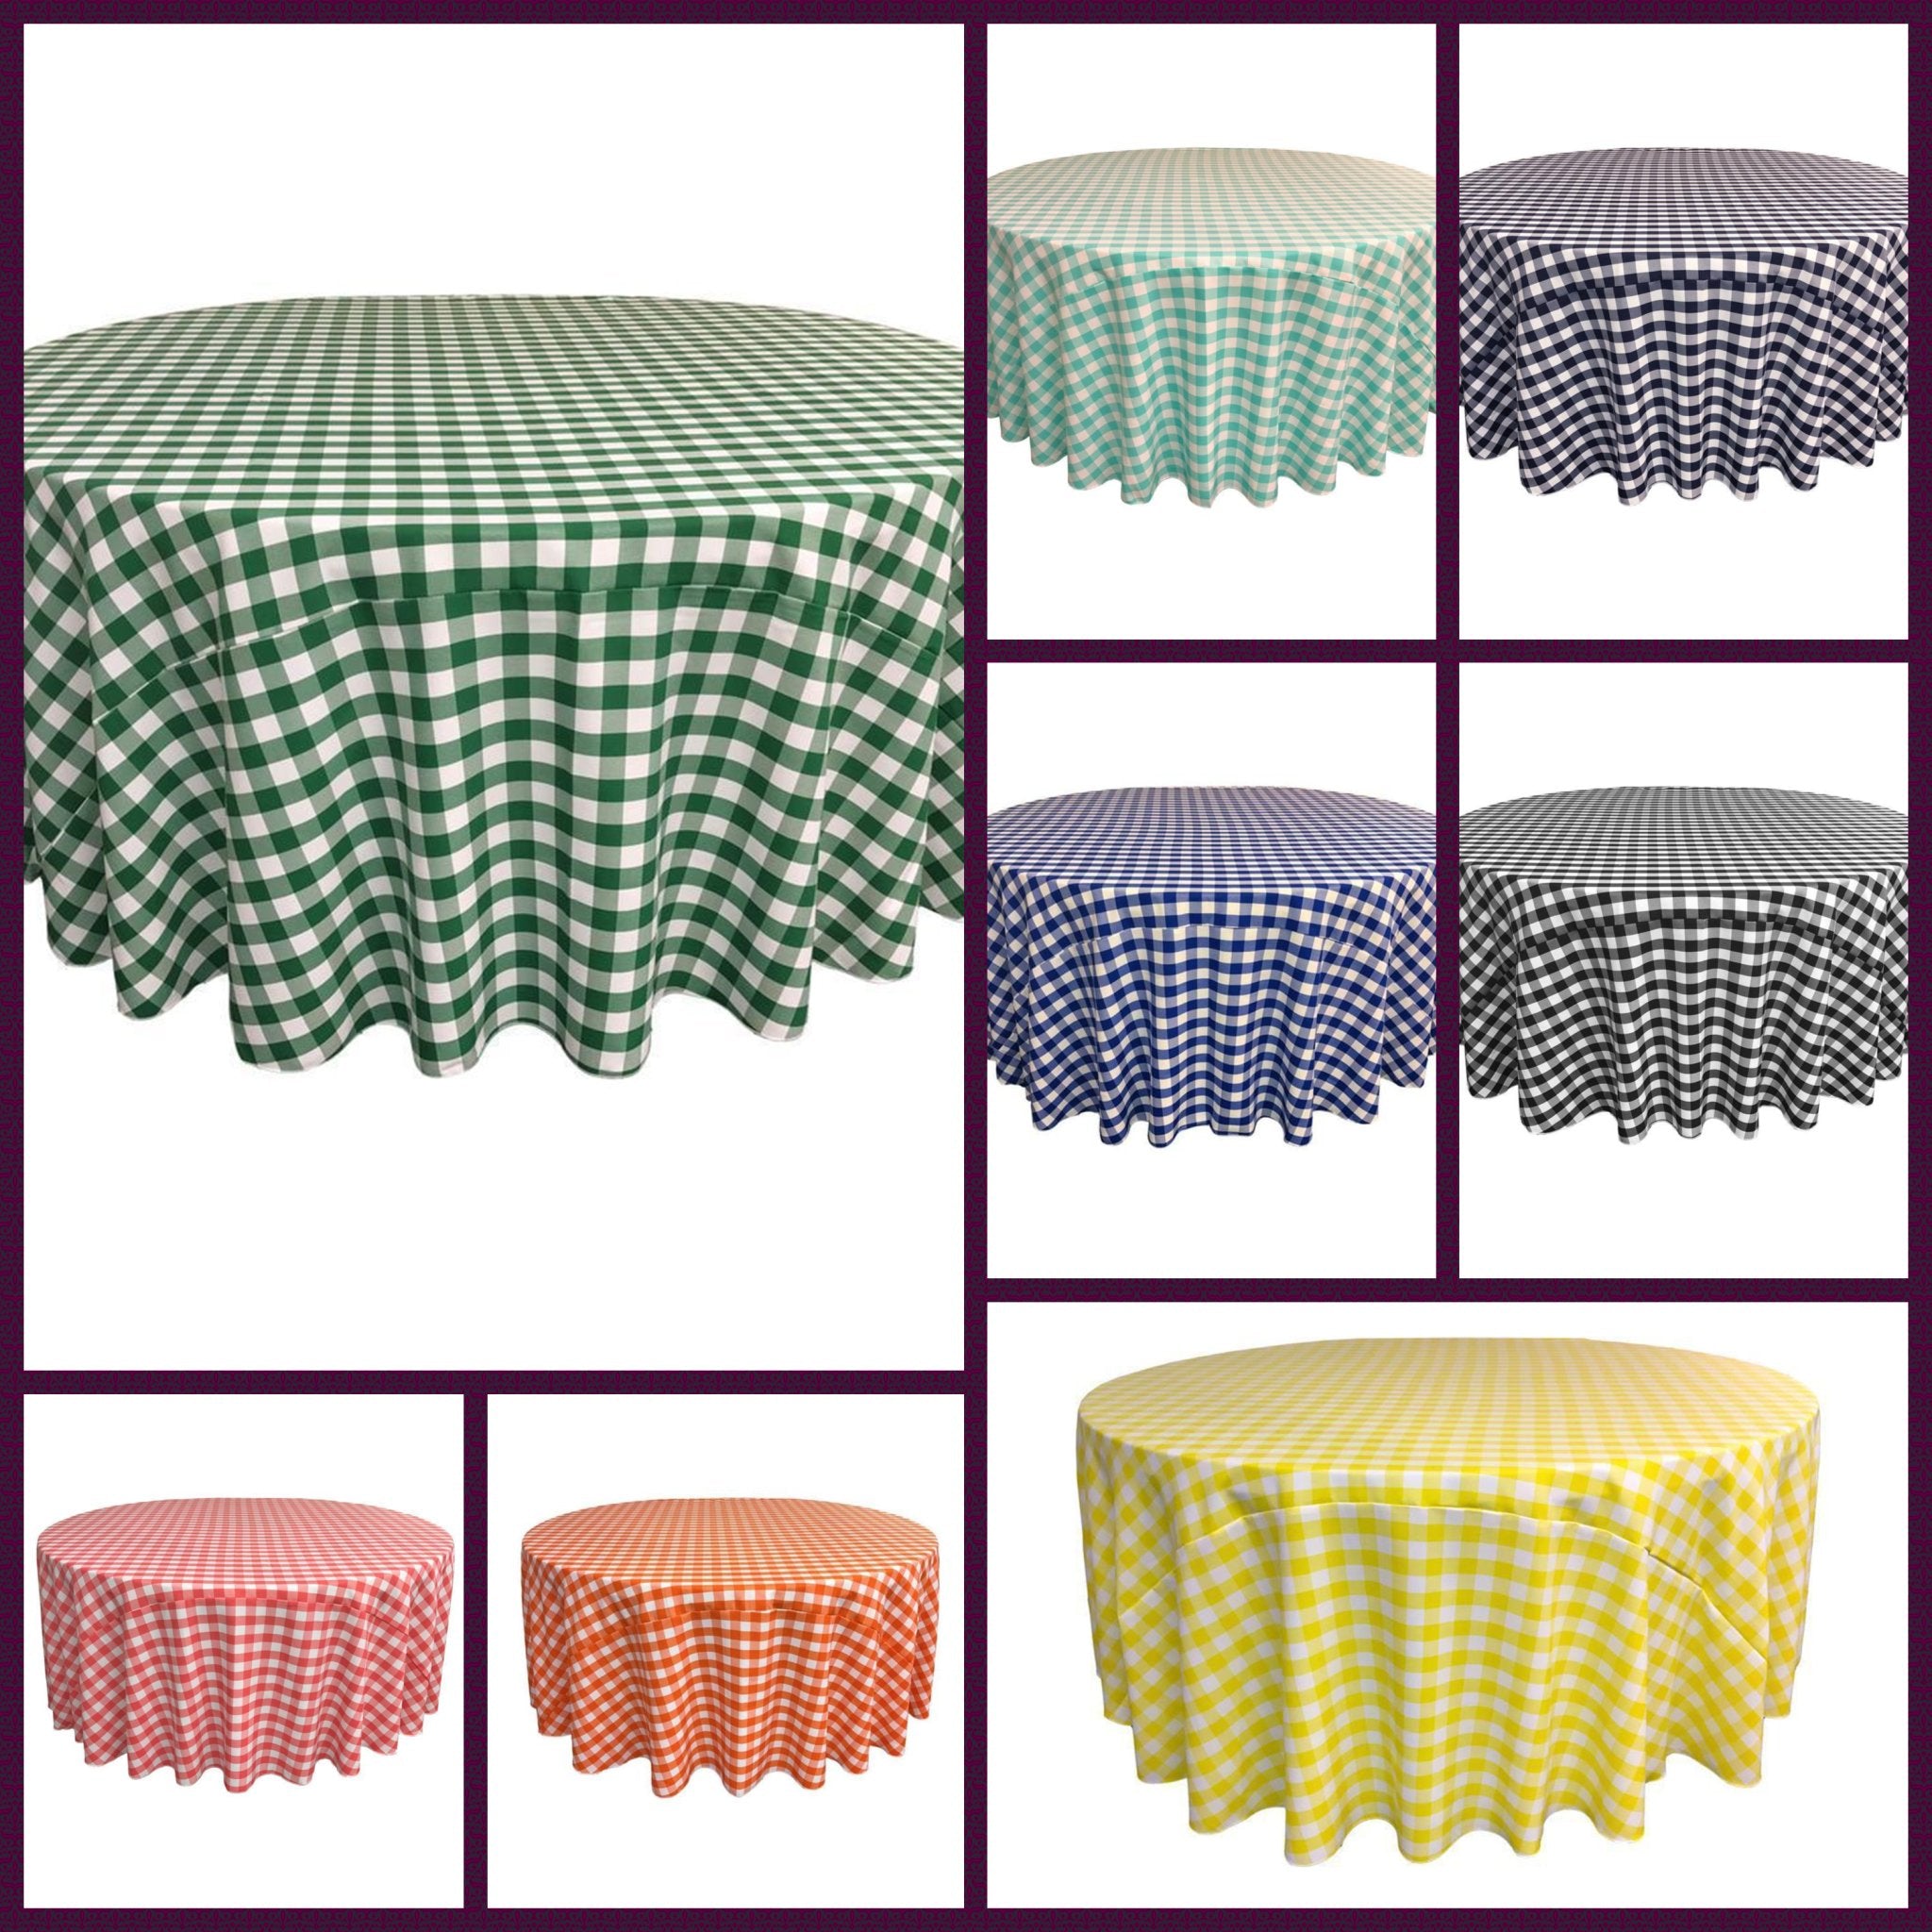 LA Linen Polyester Checkered Round Tablecloth 132 Inches FabricICEFABRICICE FABRICSBlack1LA Linen Polyester Checkered Round Tablecloth 132 Inches Fabric ICEFABRIC